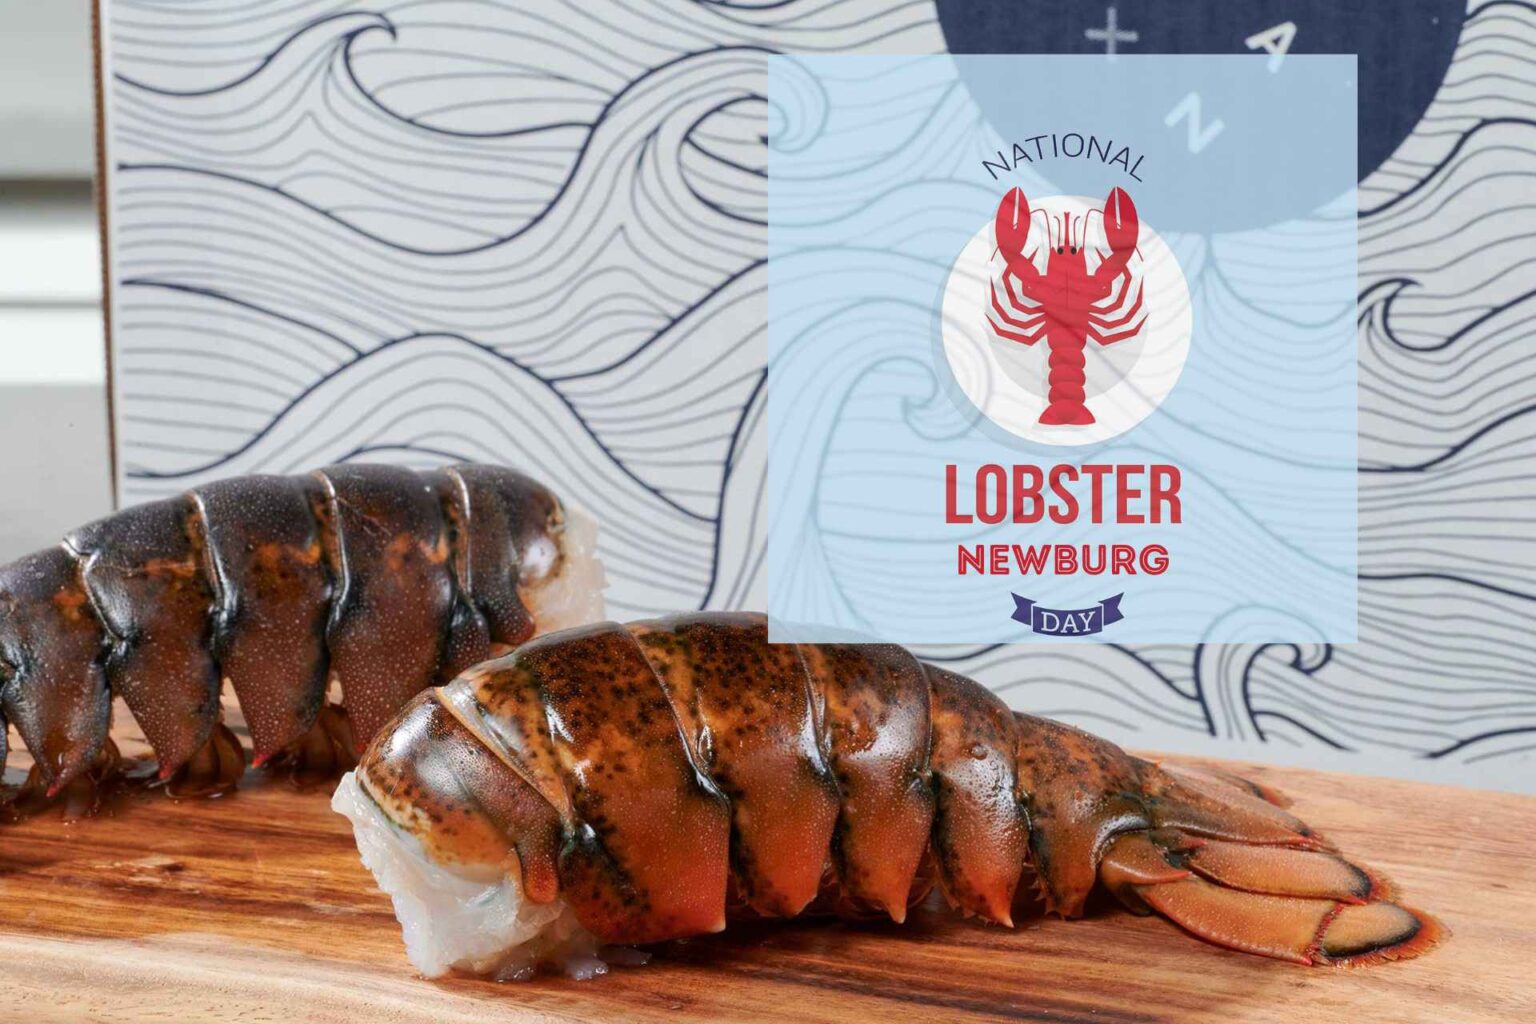 OceanBox Seafood Presents National Lobster Newburg Day!